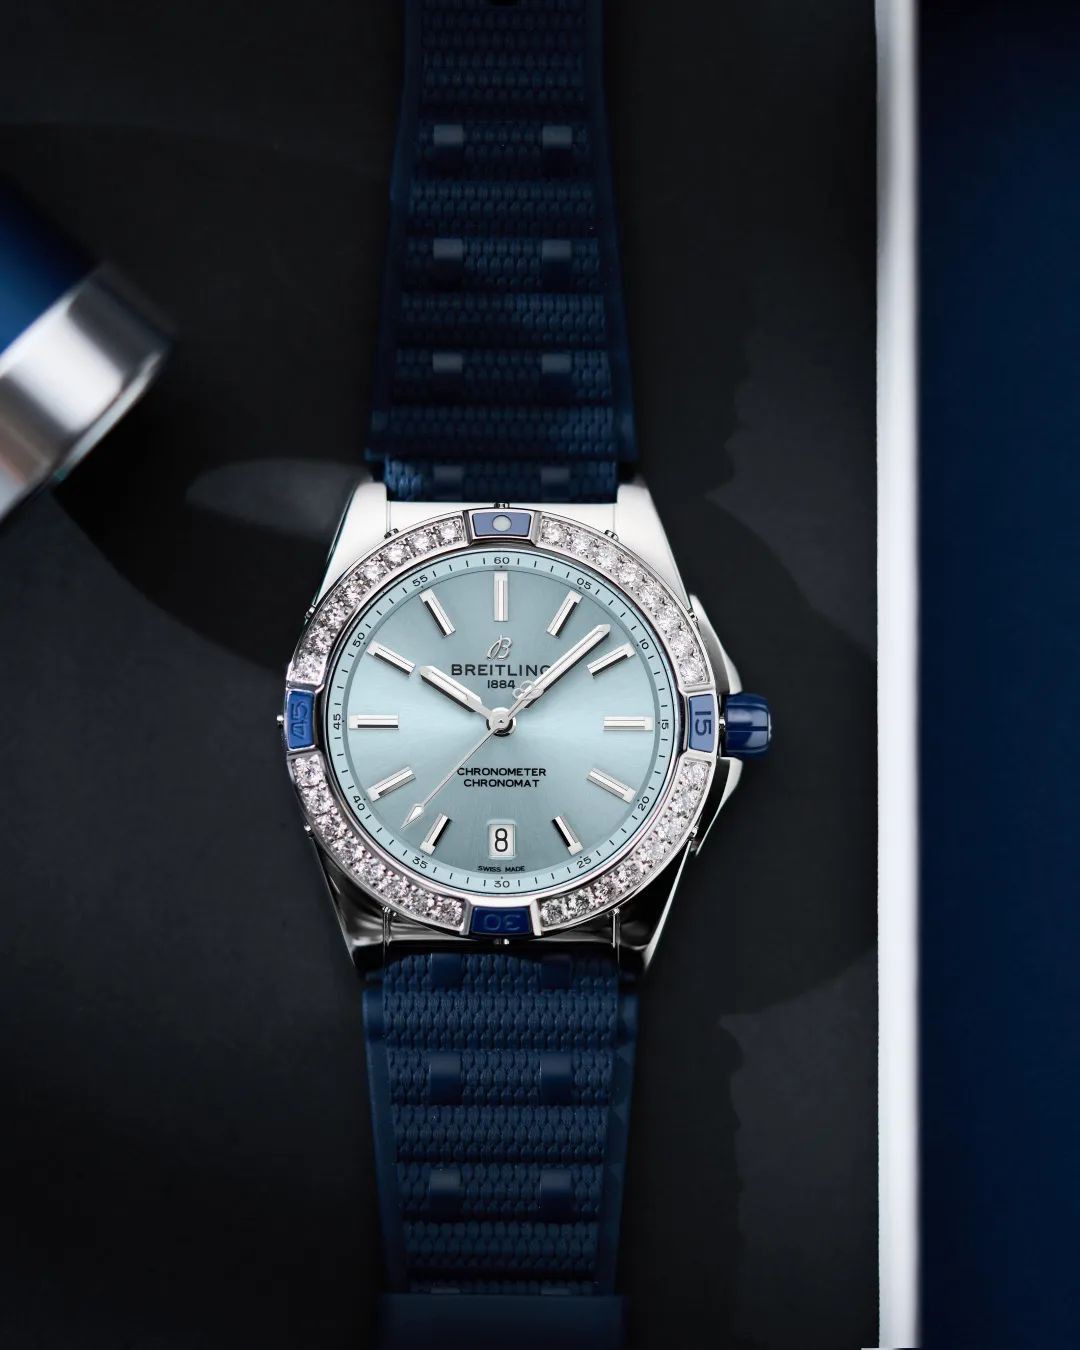 Breitling replica watch model 2